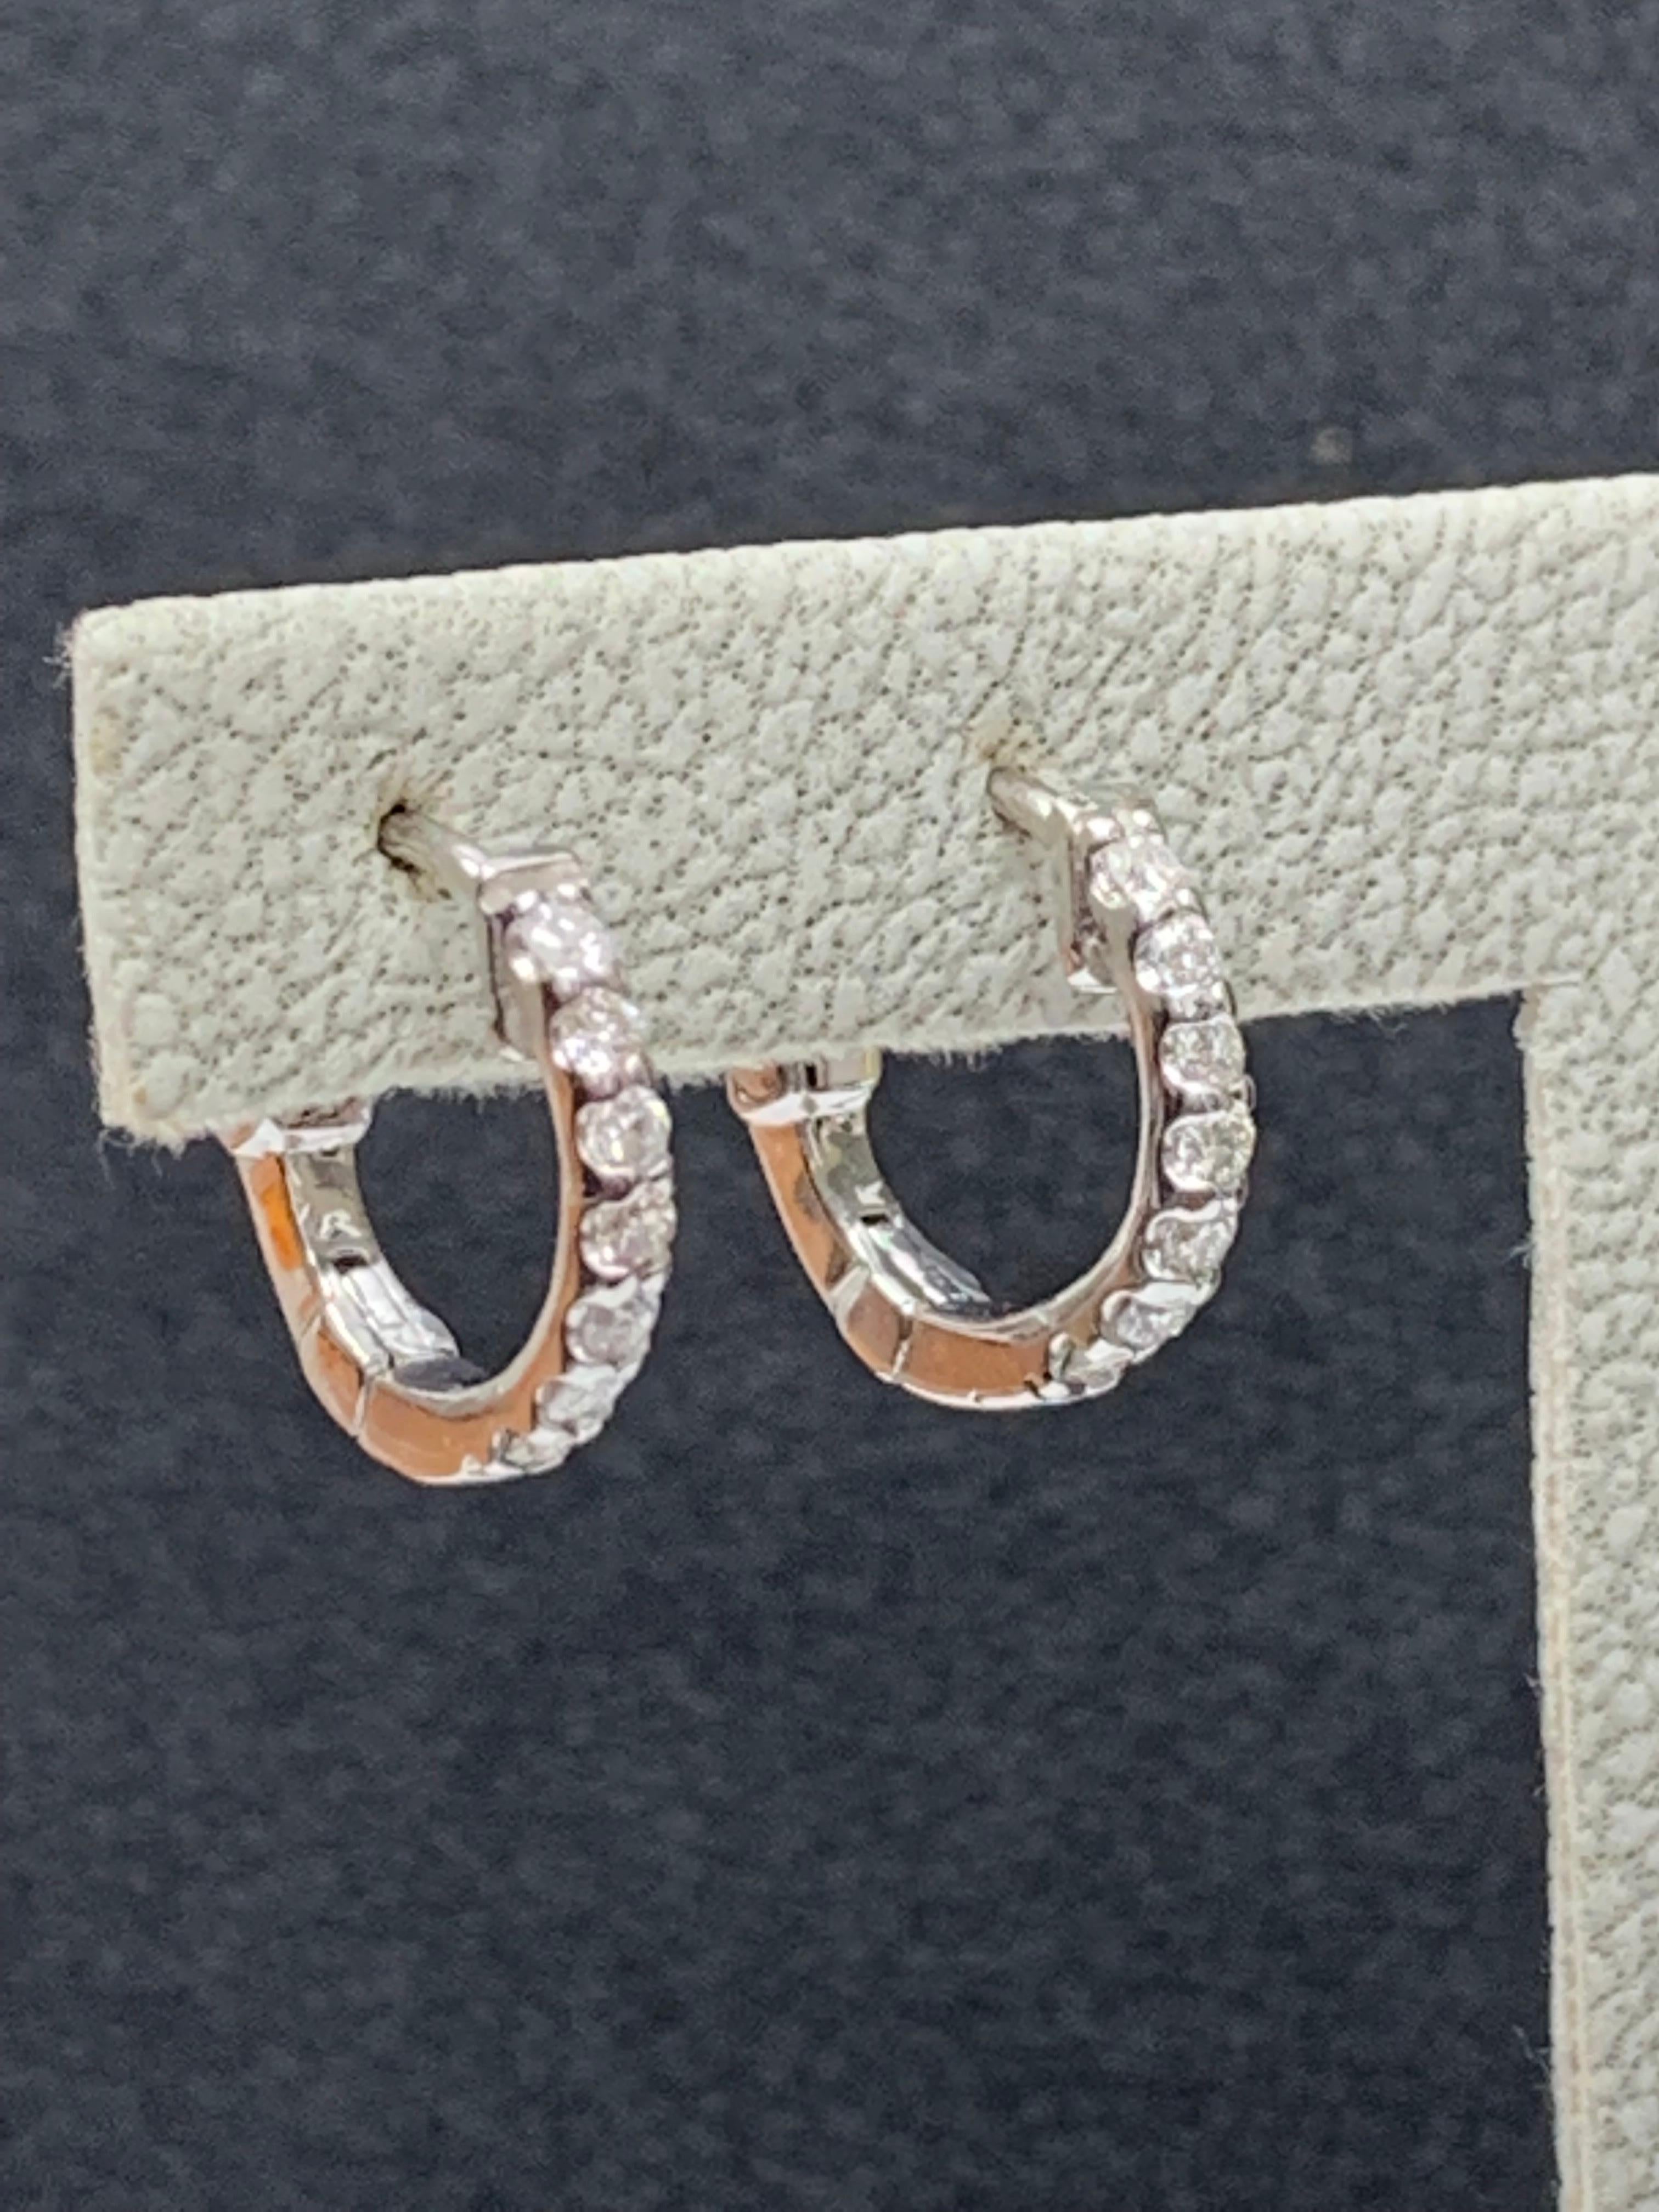 0.25 Carat Diamond Hoop Earrings in 14k White Gold For Sale 3